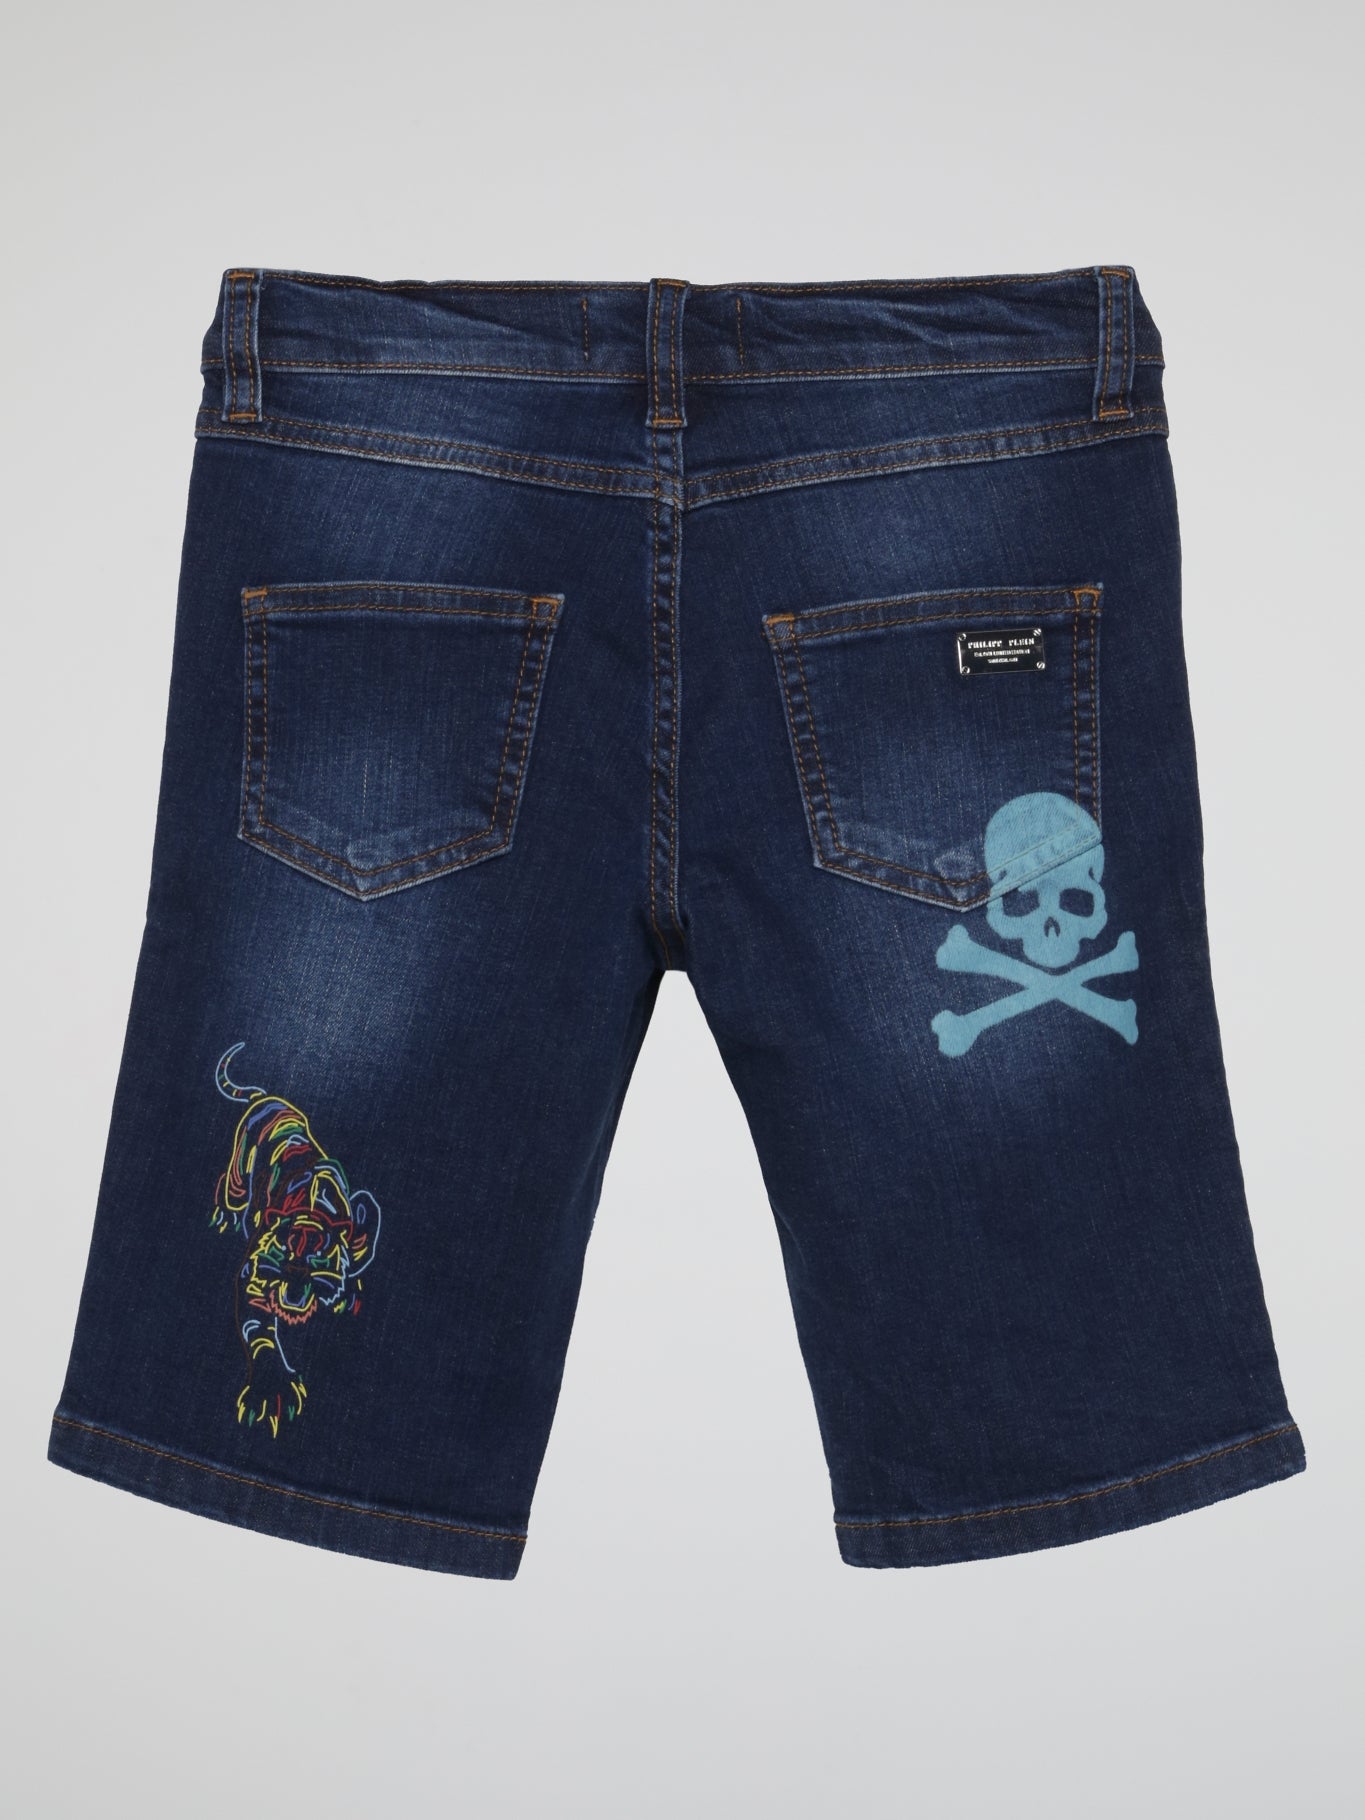 Gothic Plein Blue Faded Denim Shorts (Kids)